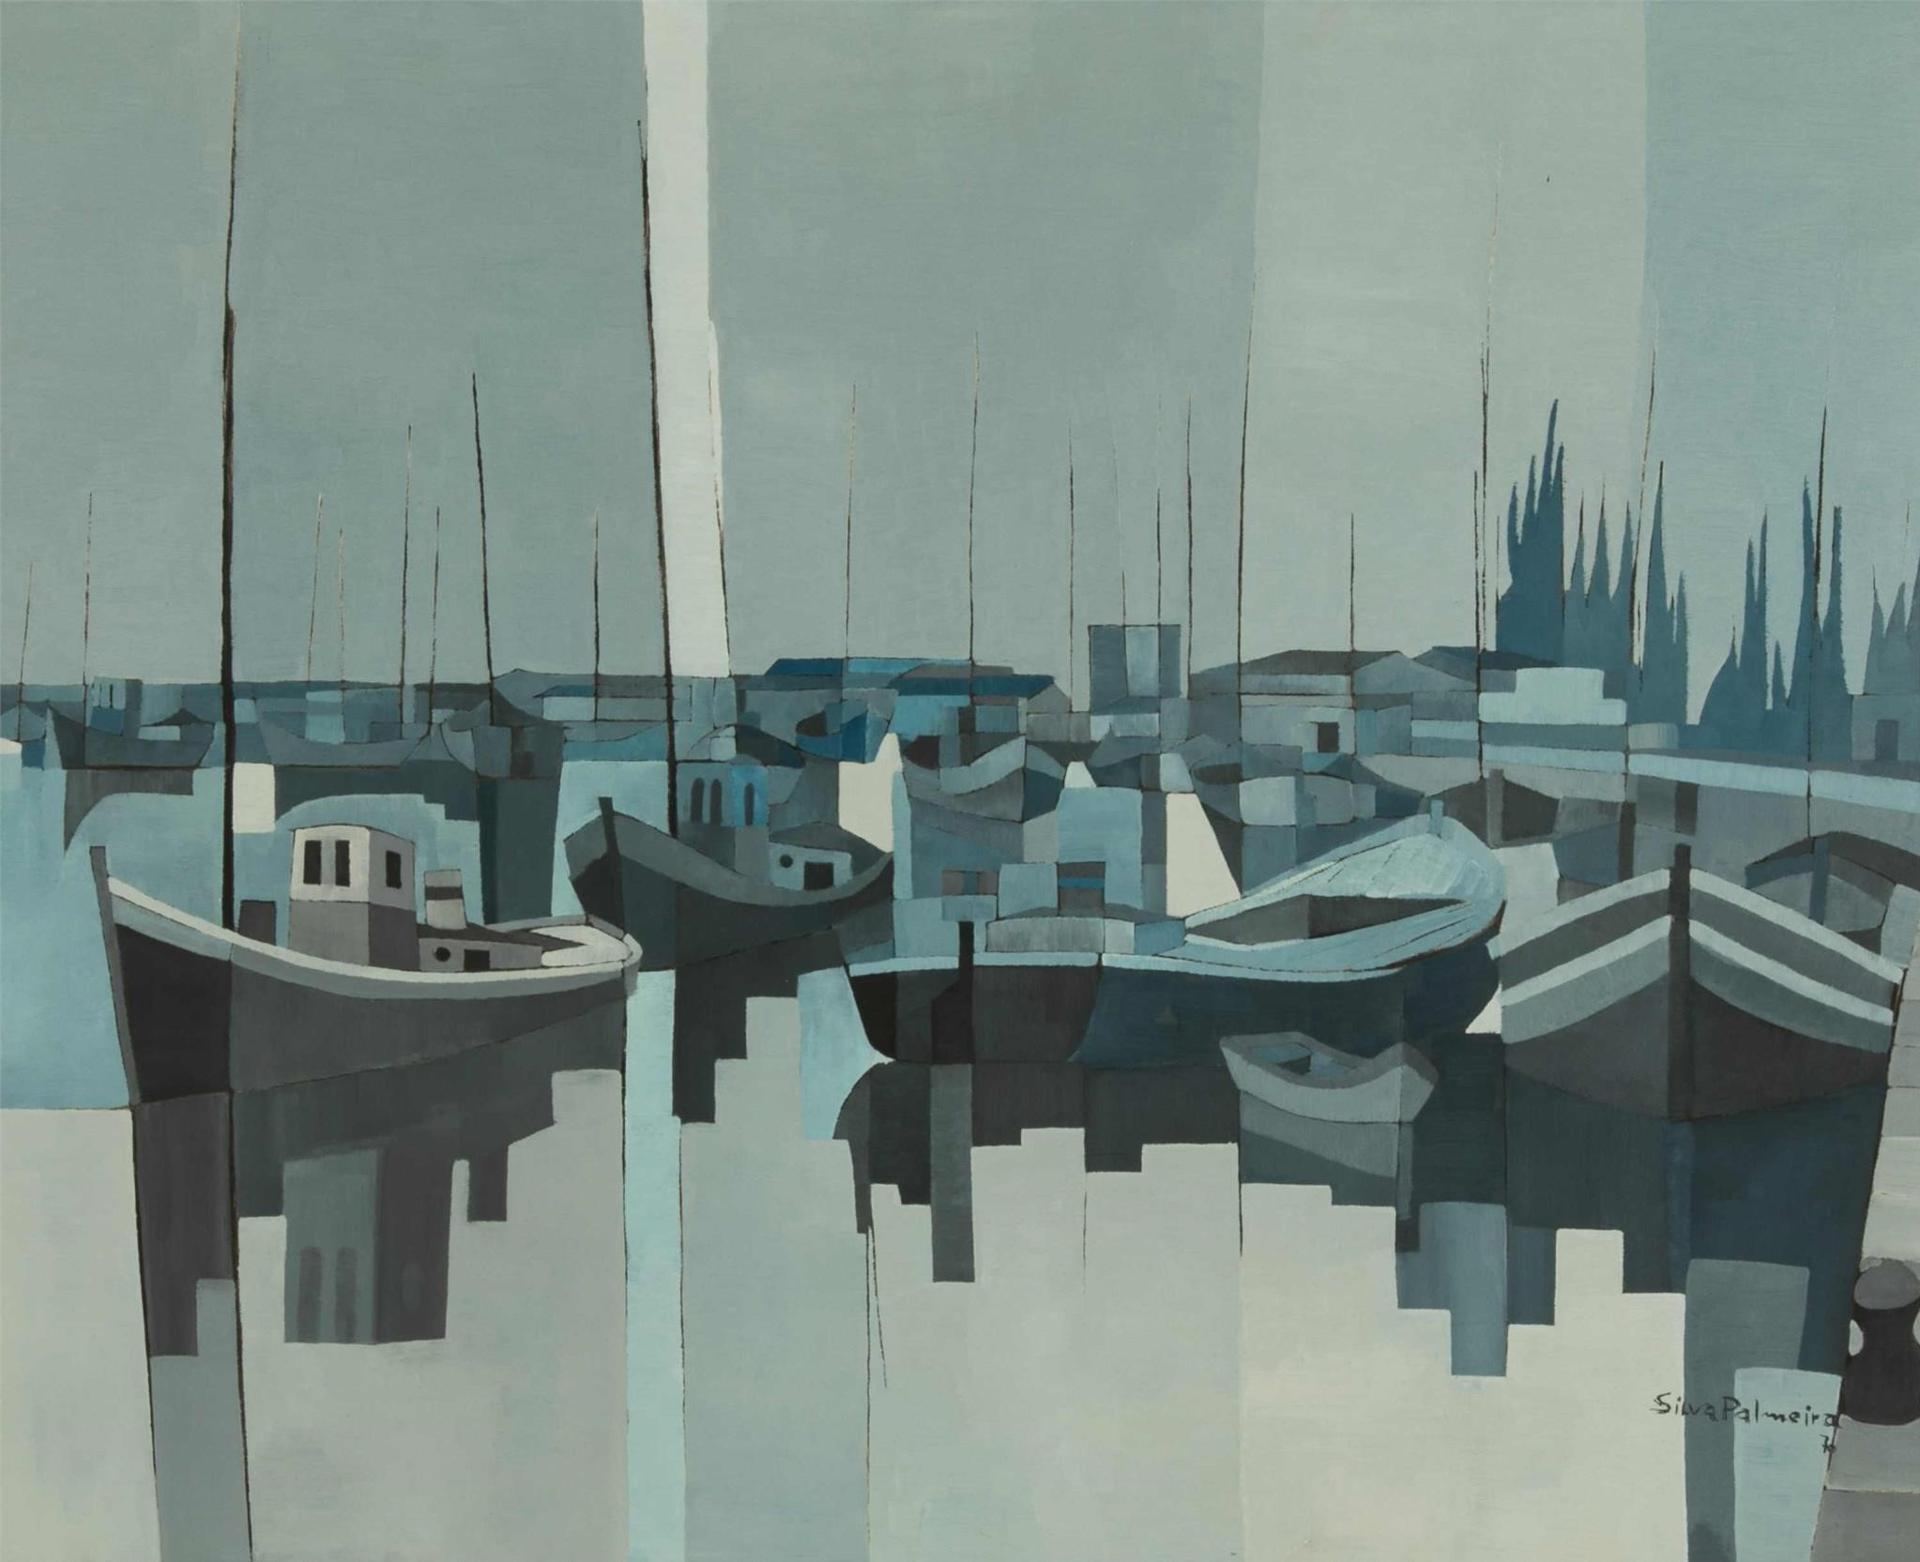 Silva Palmeria (1934) - Moonlit Pier